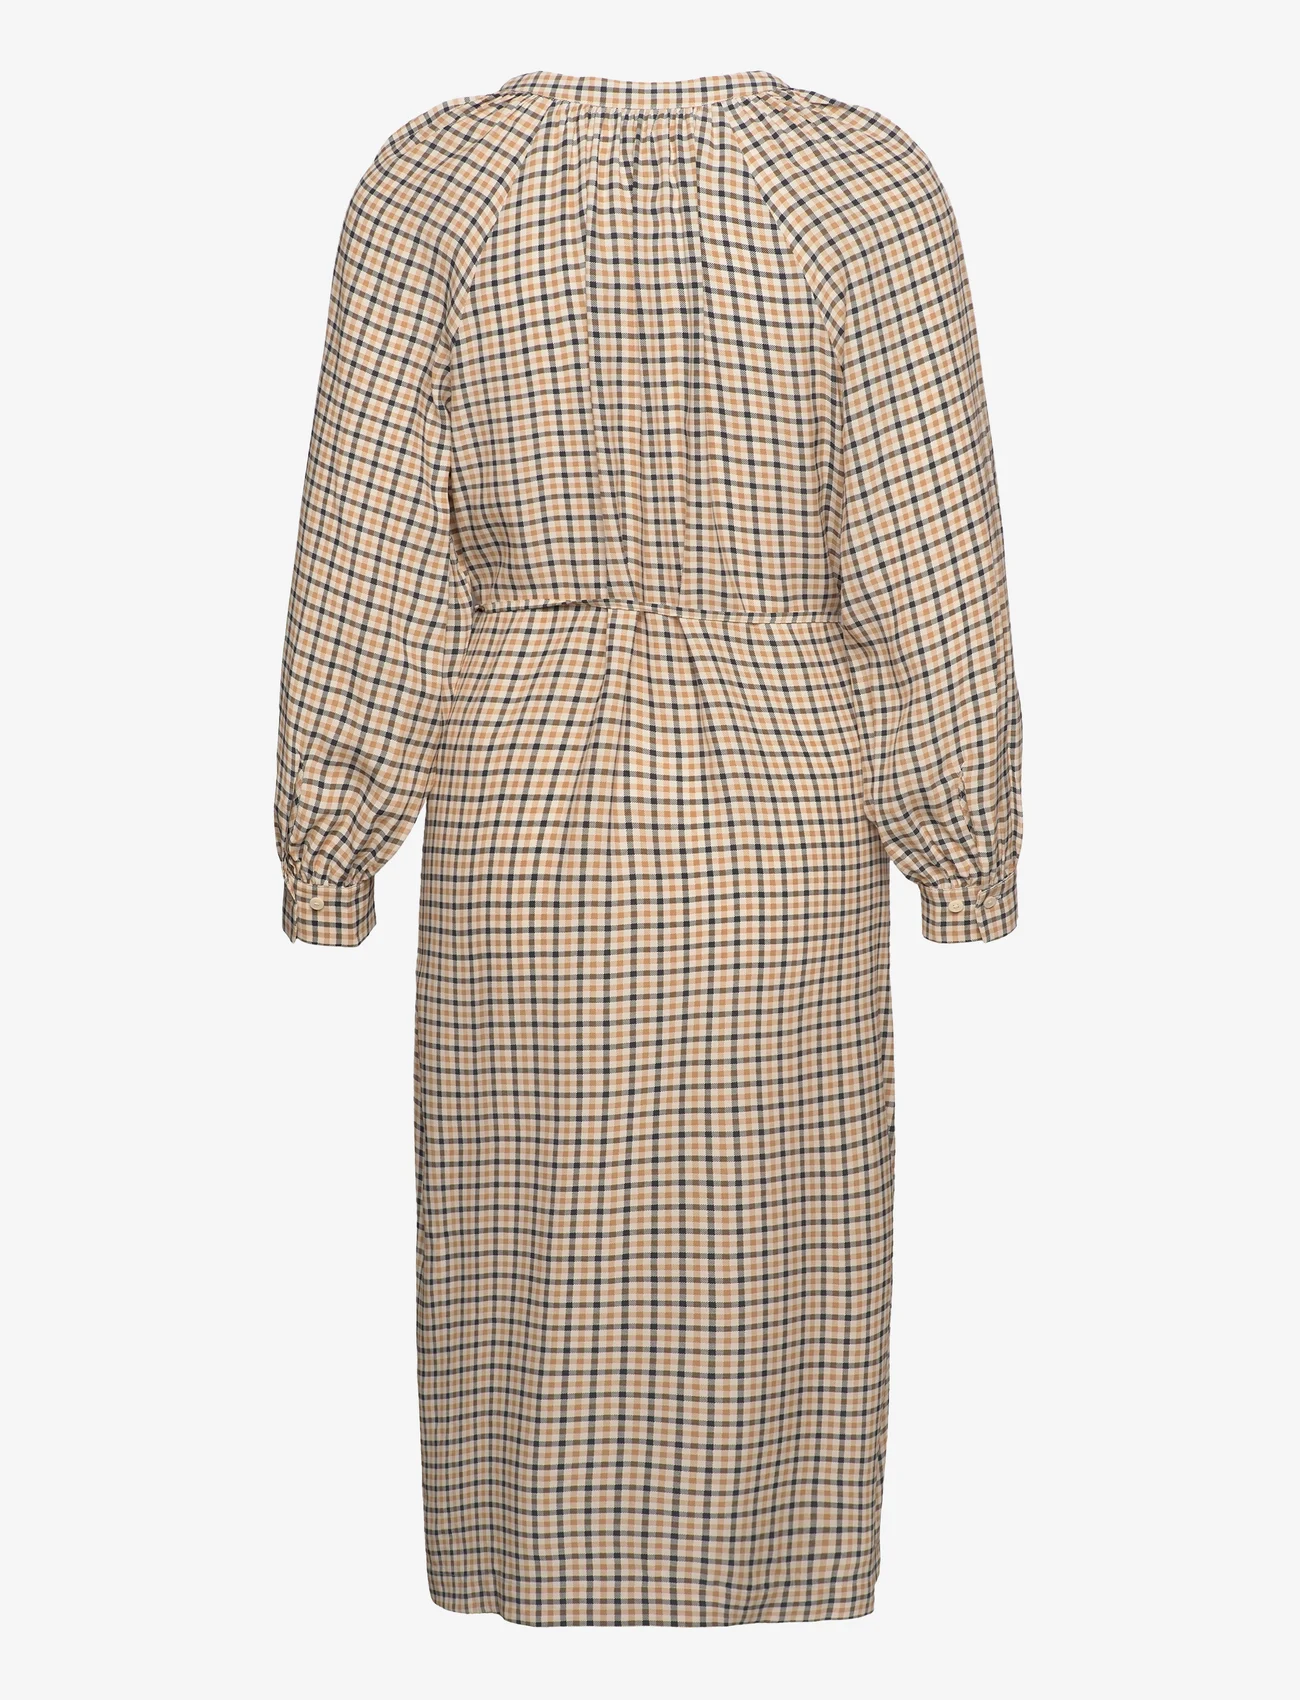 GANT - D1. CHECK STAND COLLAR SHIRT DRESS - marškinių tipo suknelės - toffee beige - 1